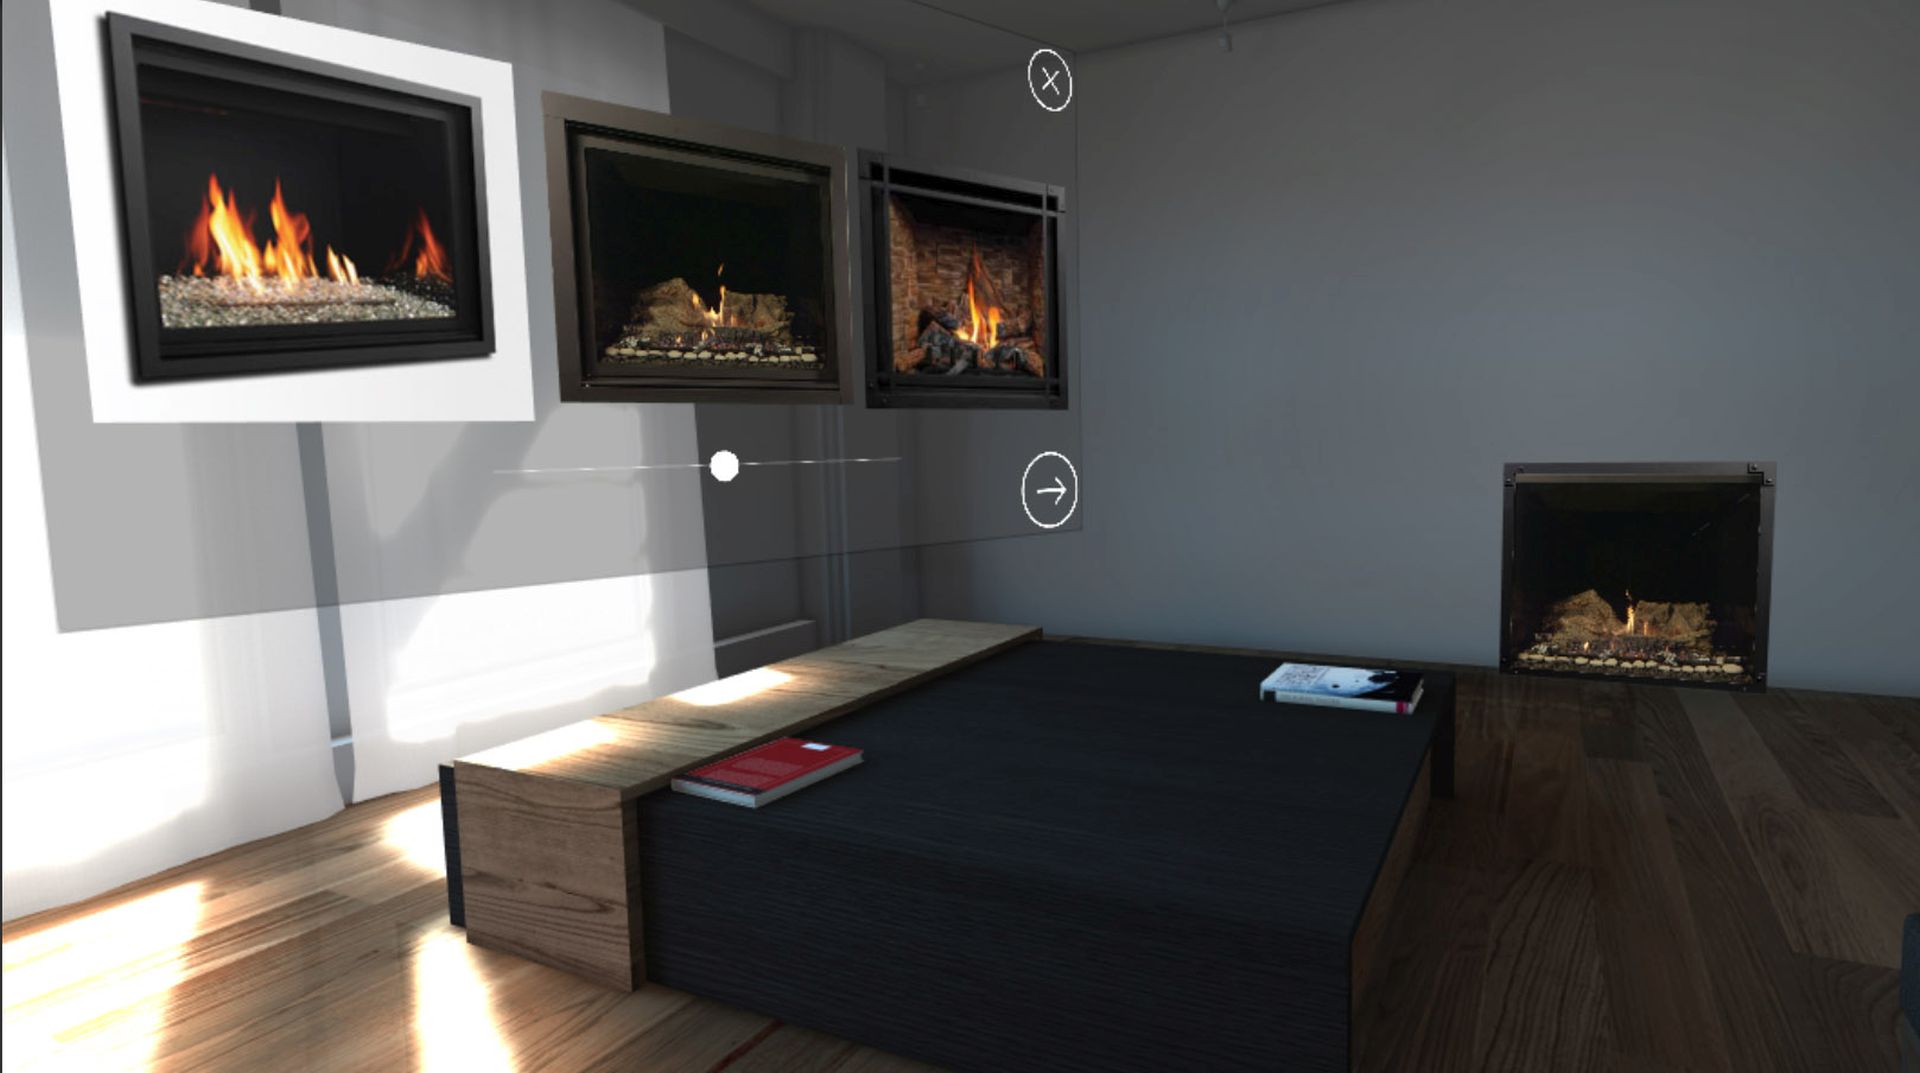 lg tv fireplace screensaver app